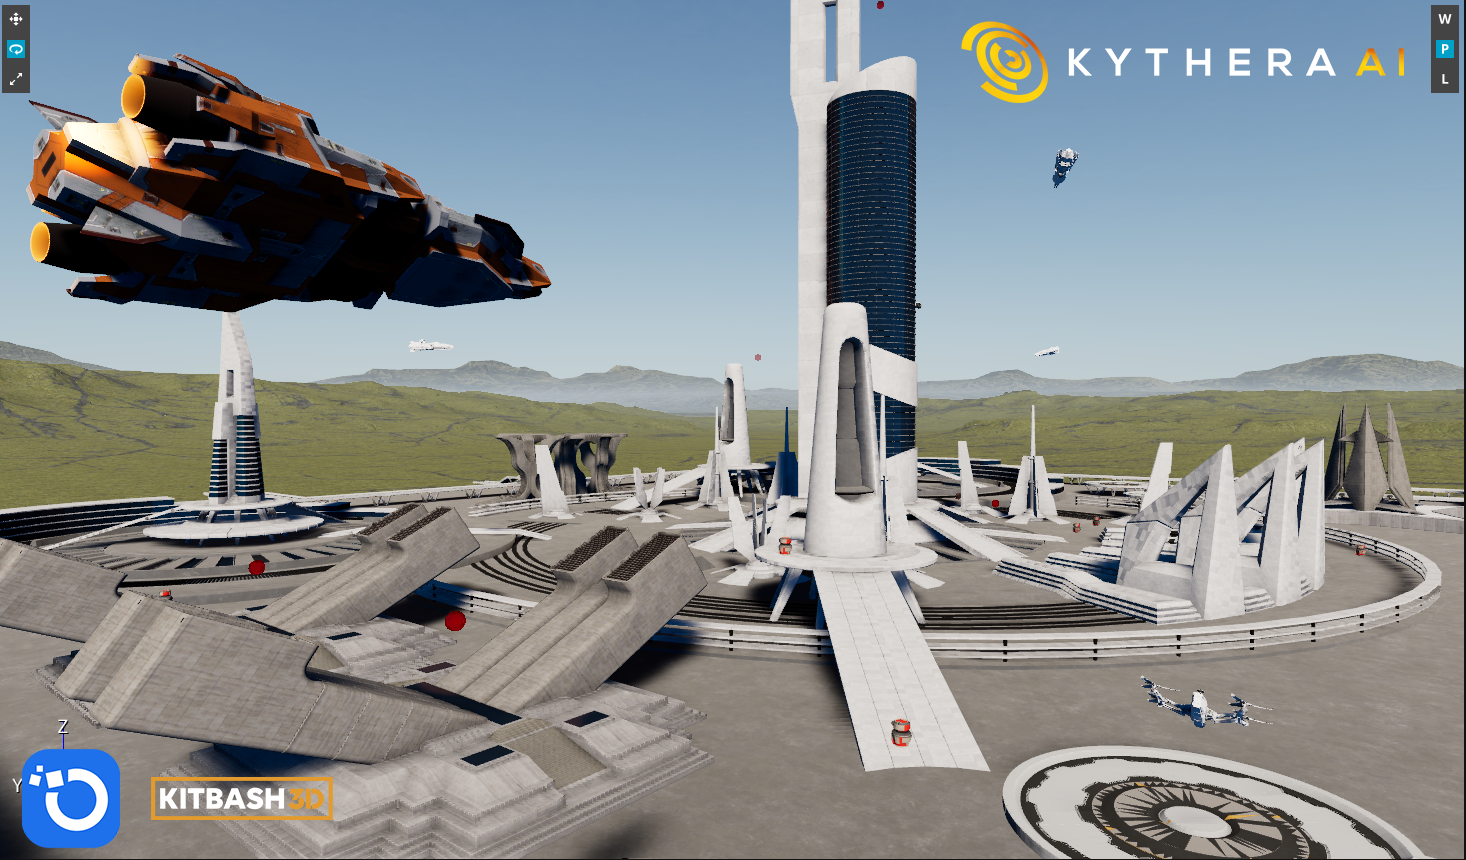 An AI spaceship navigates Kythera City